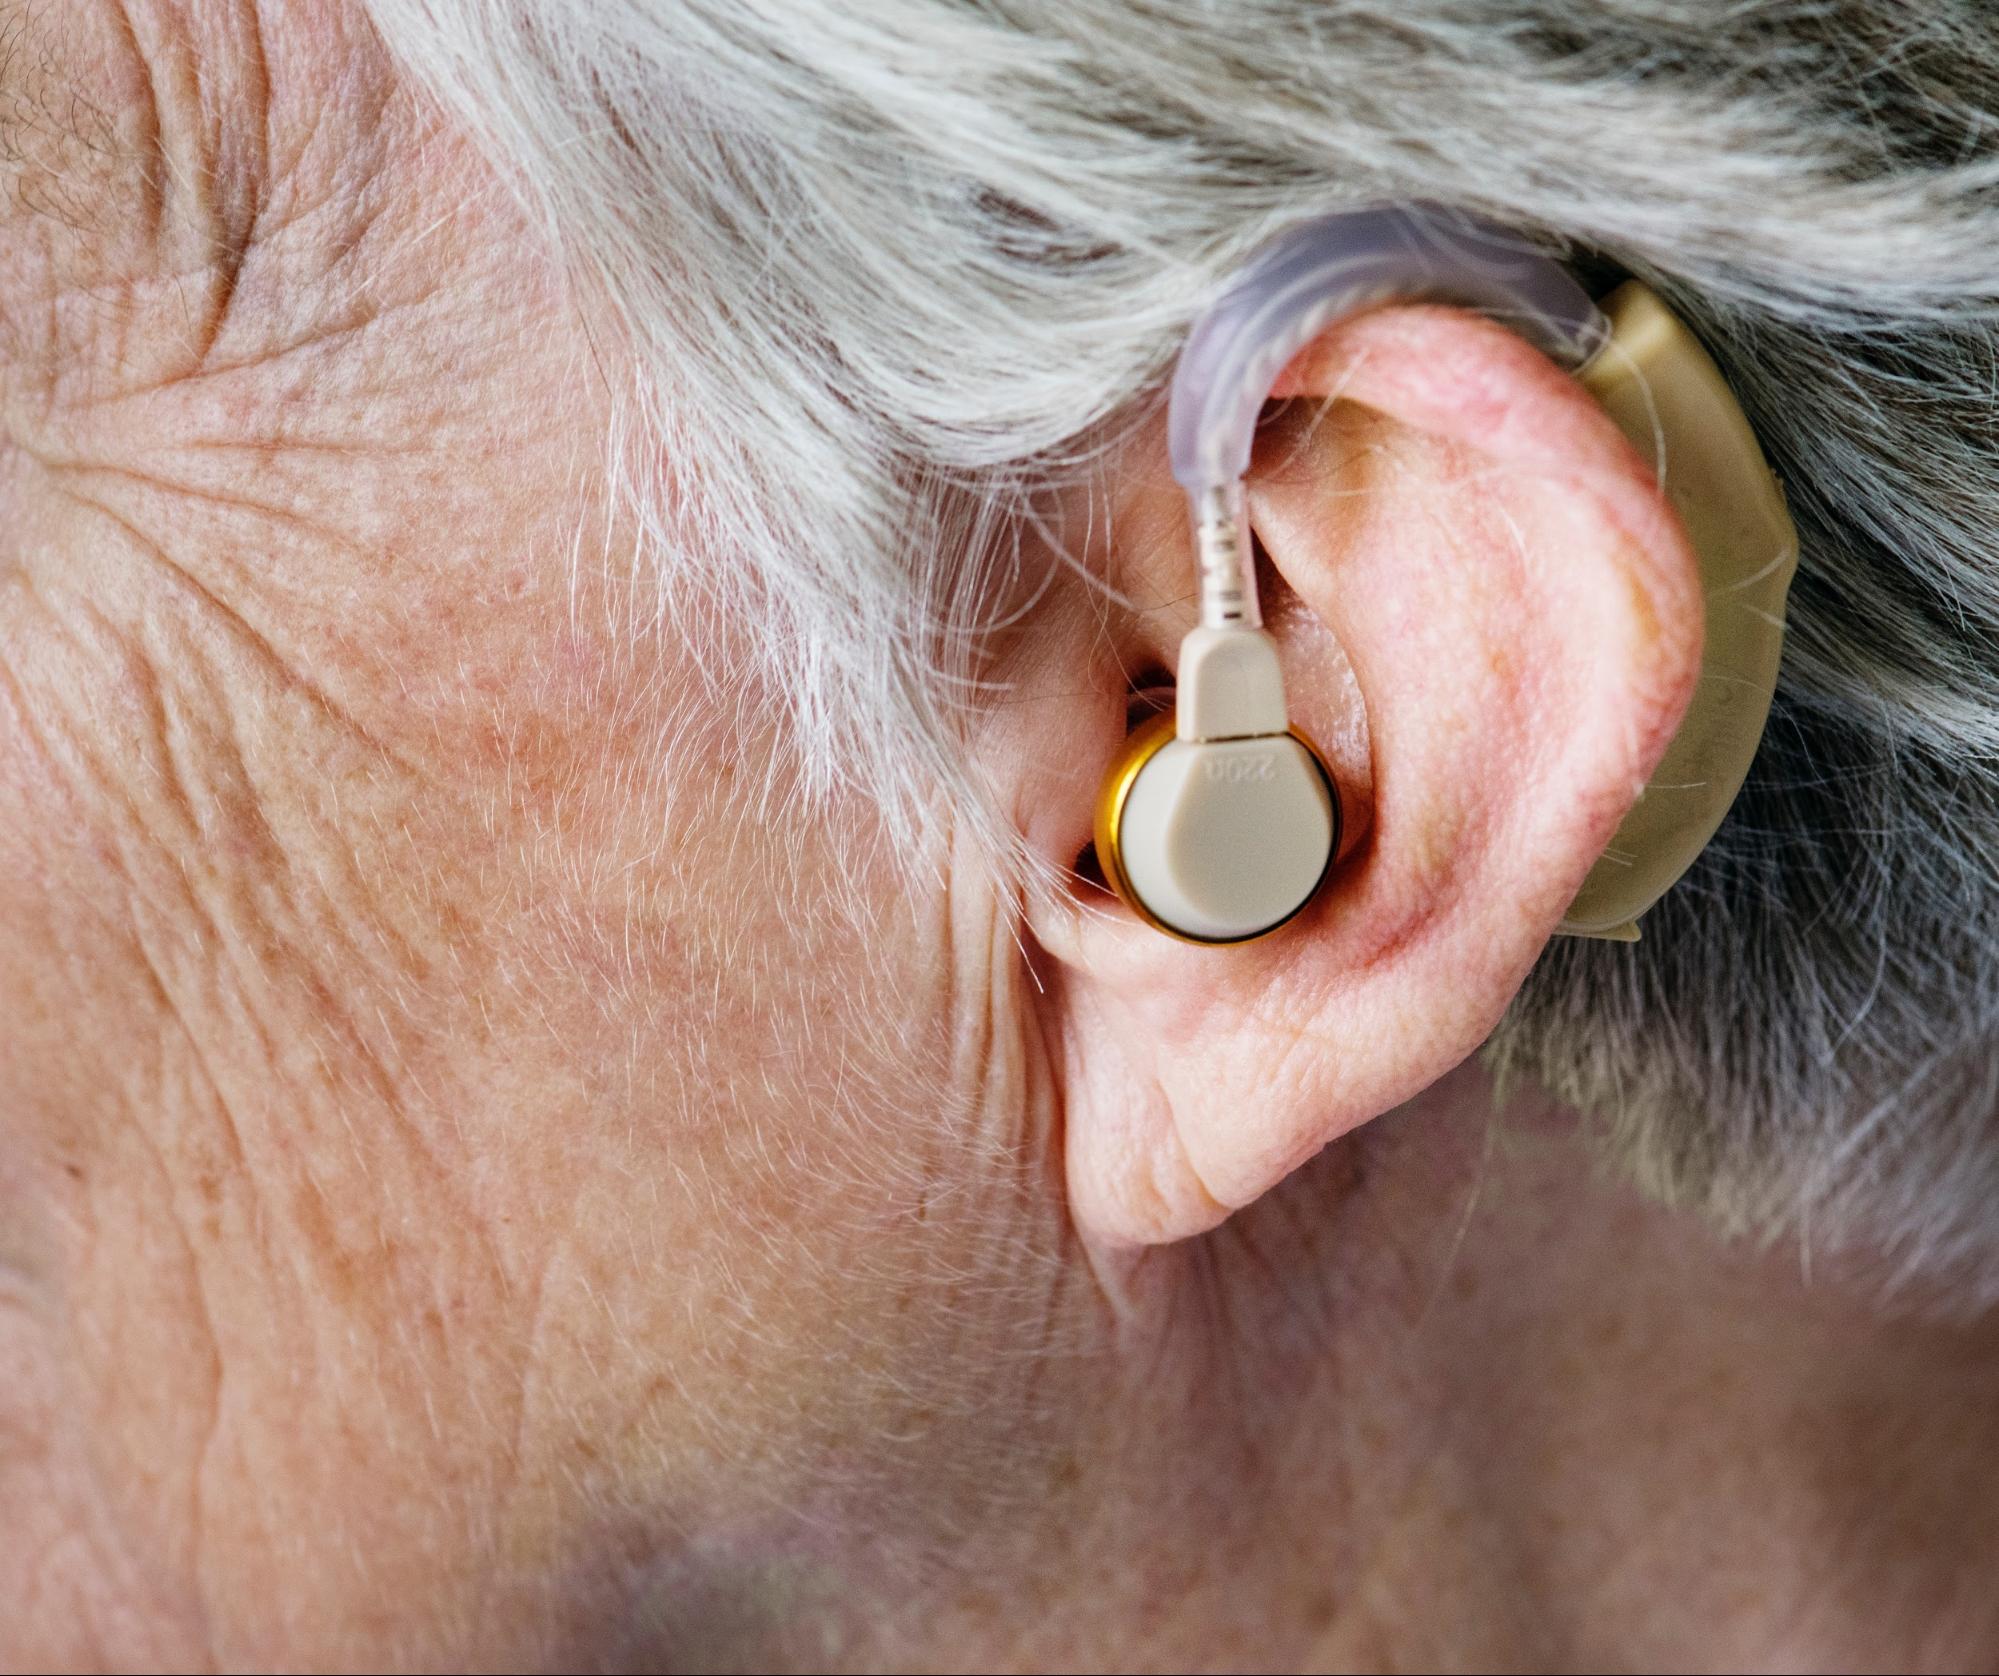 wearing hearing aids